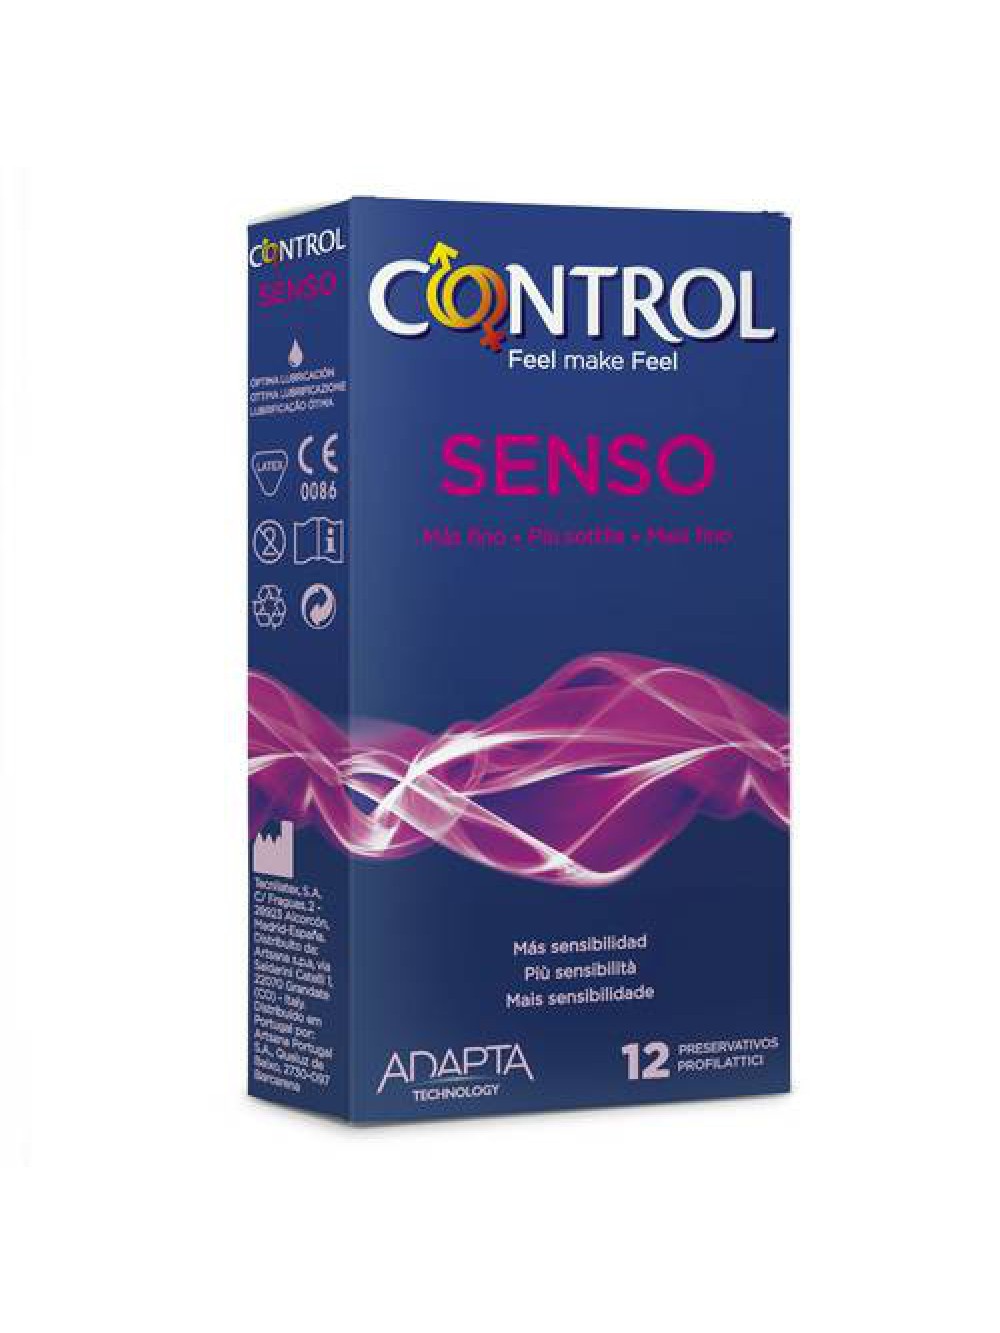 Control Senso 12 preservativi 8003670818755